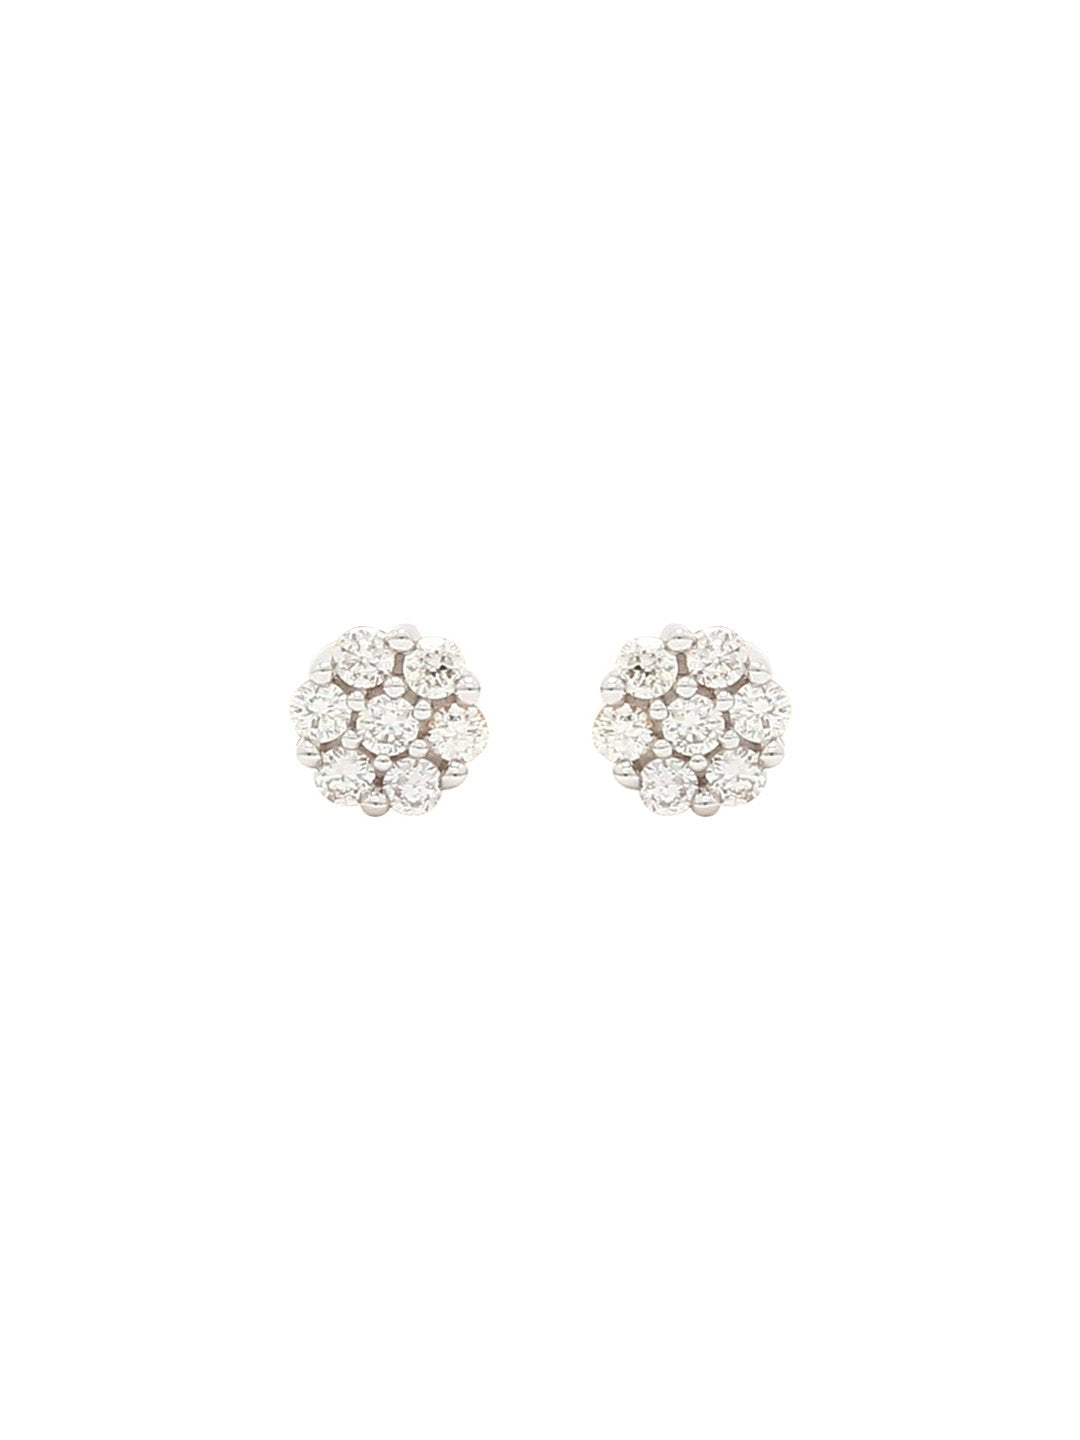 Real Diamond Cluster Stud Earring (Rose Gold) - Zest Mélange 